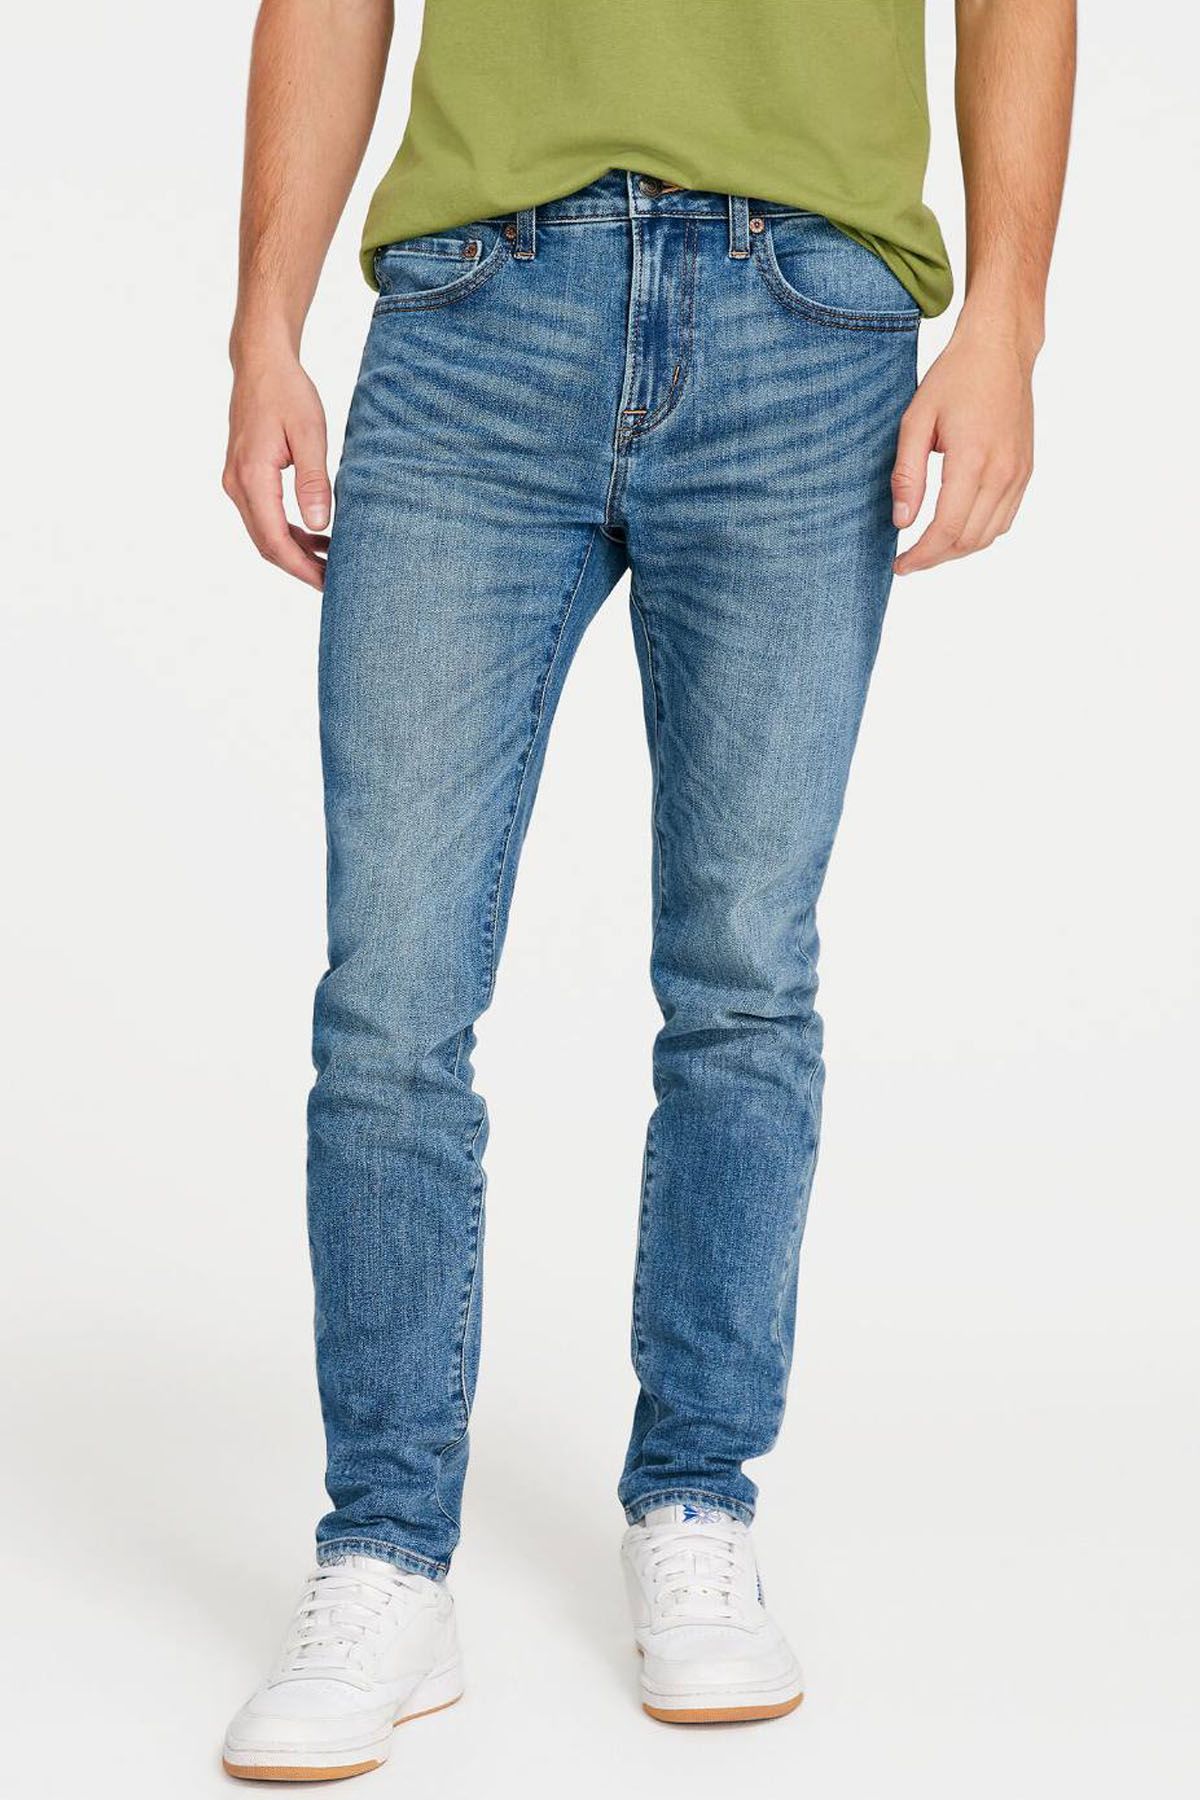 Aeropostale super skinny jeans in dark blue